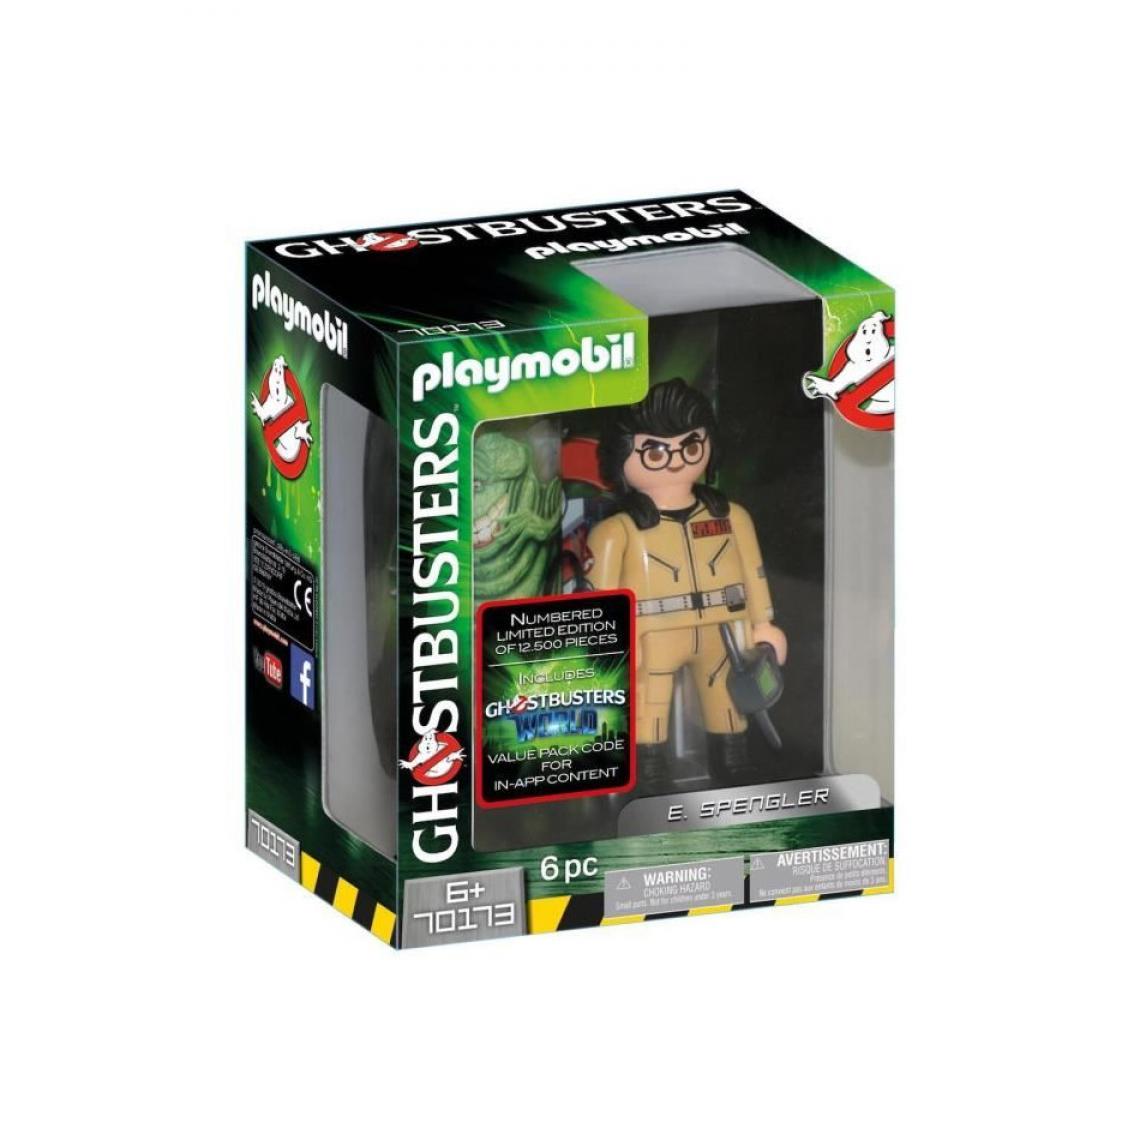 Playmobil - 70173 Playmobil Ghostbusters? Edition Col Spengler 0419 - Playmobil